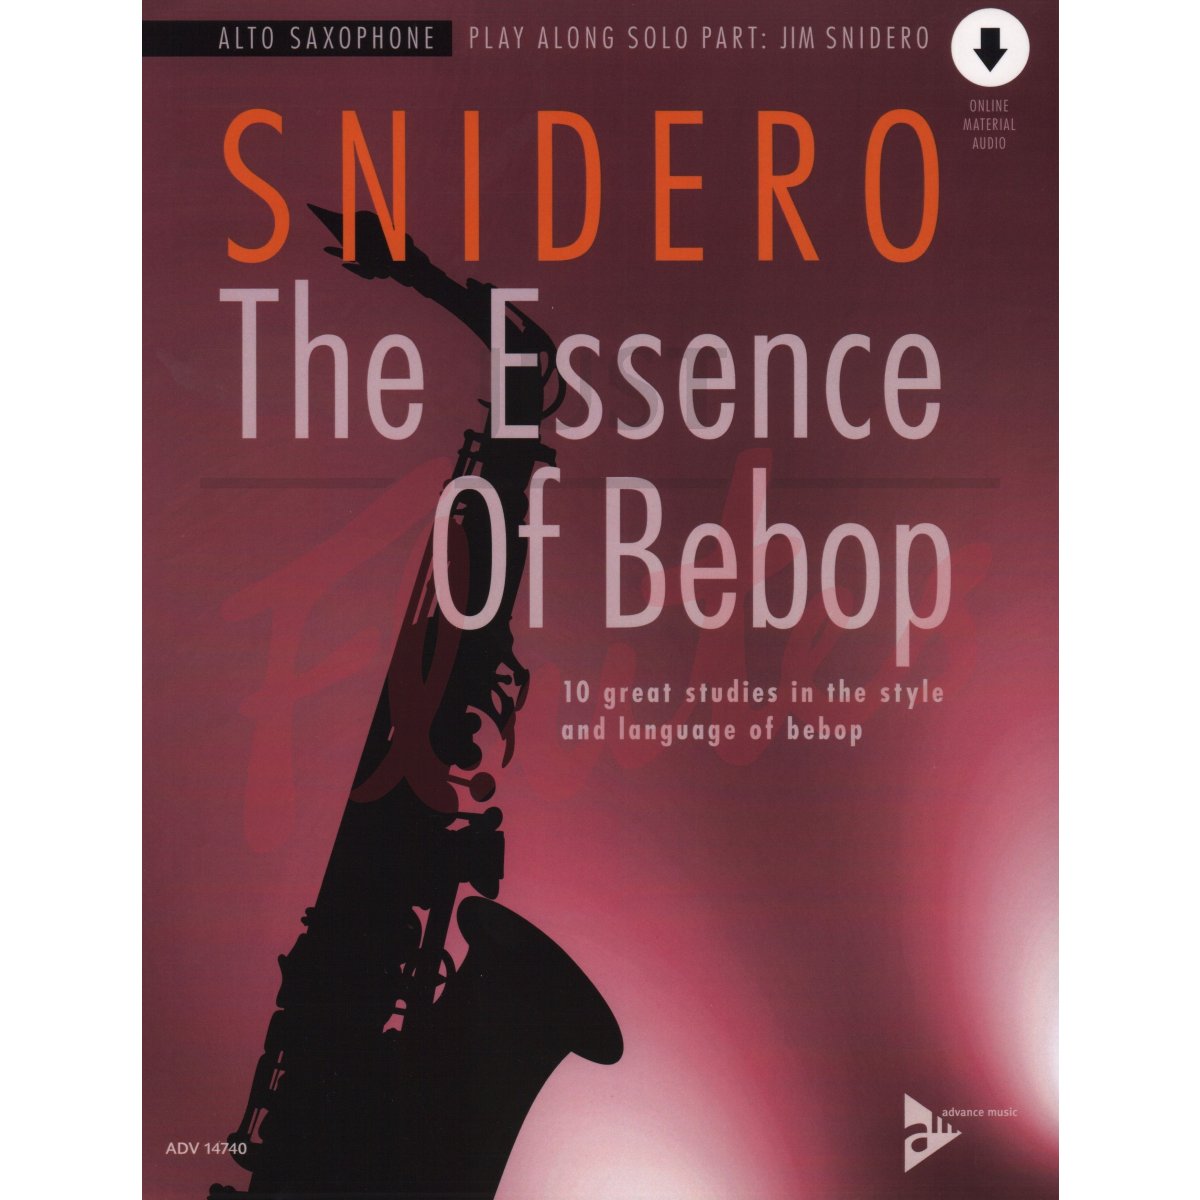 The Essence of Bebop [Alto Saxophone]